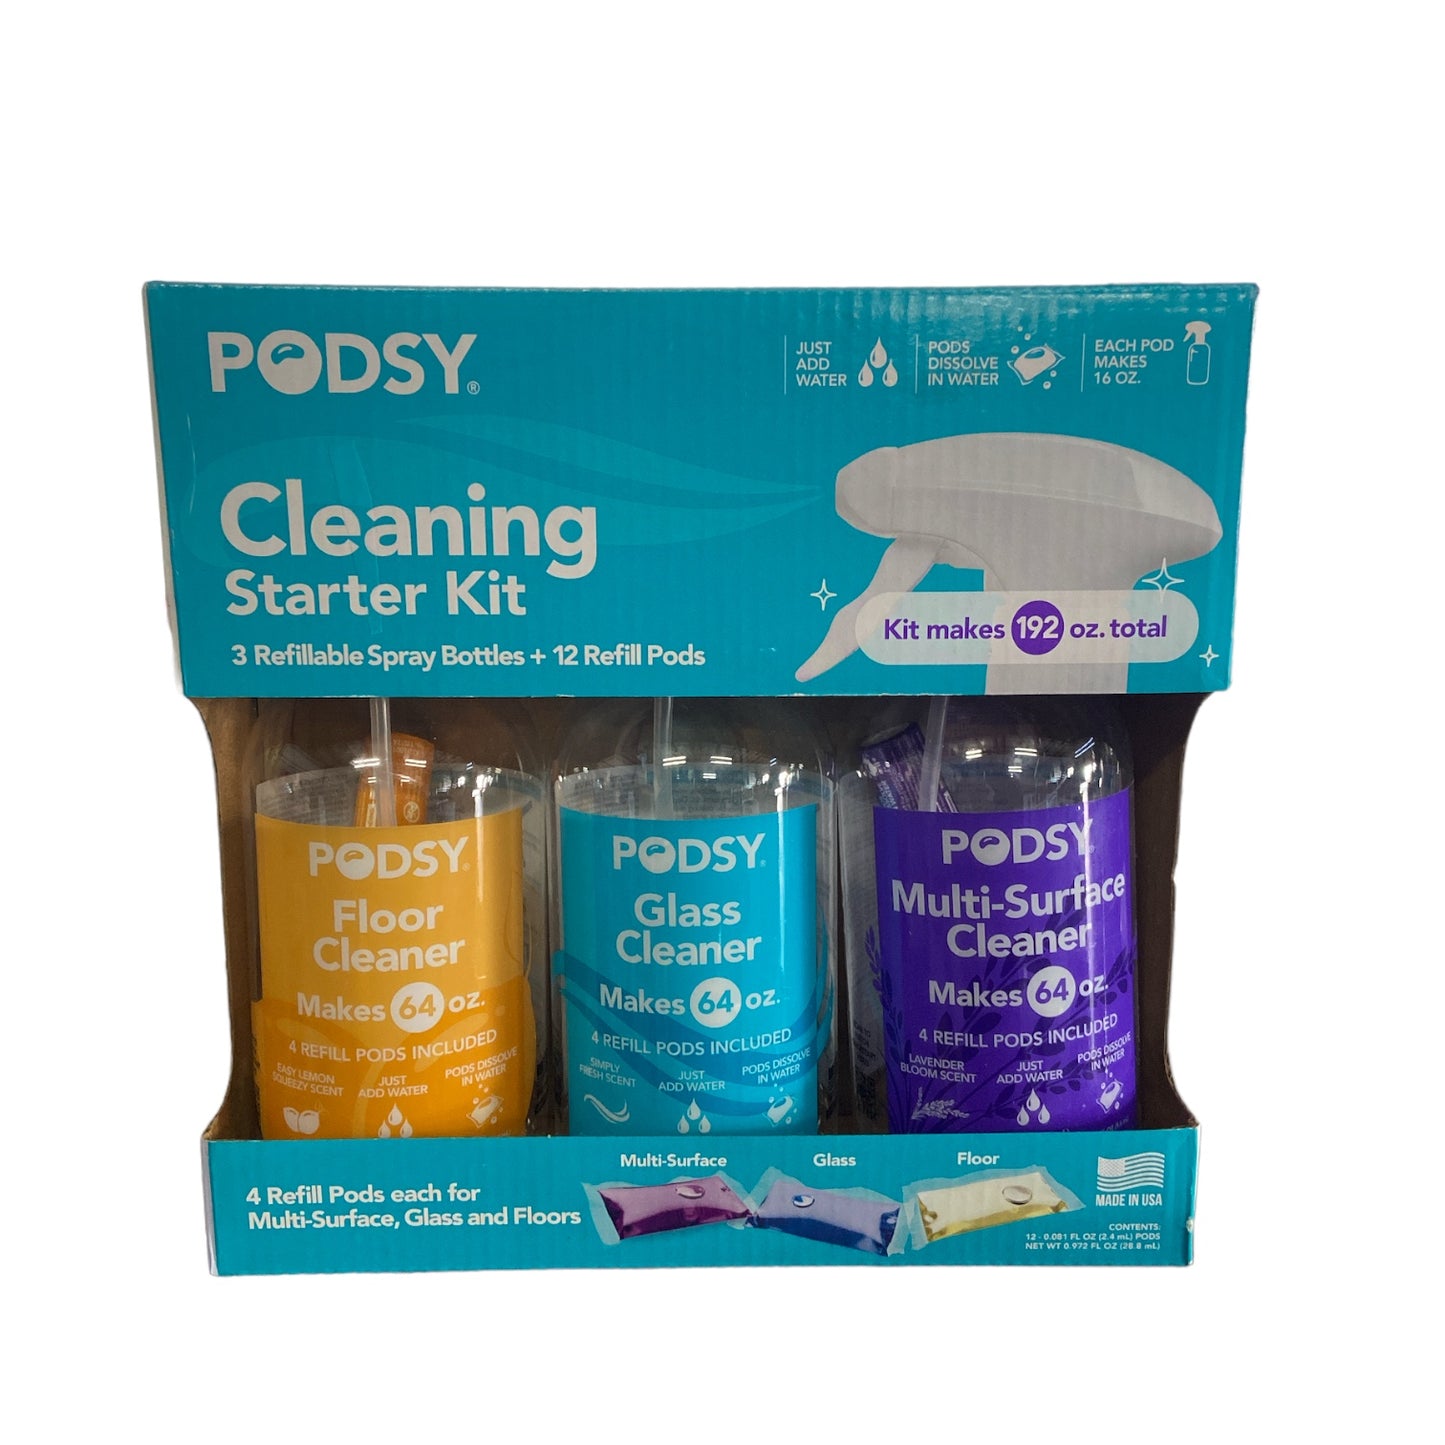 Podsy Cleaning Refillable Starter Kit (3 Spray Bottles + 12 Refill Pods)